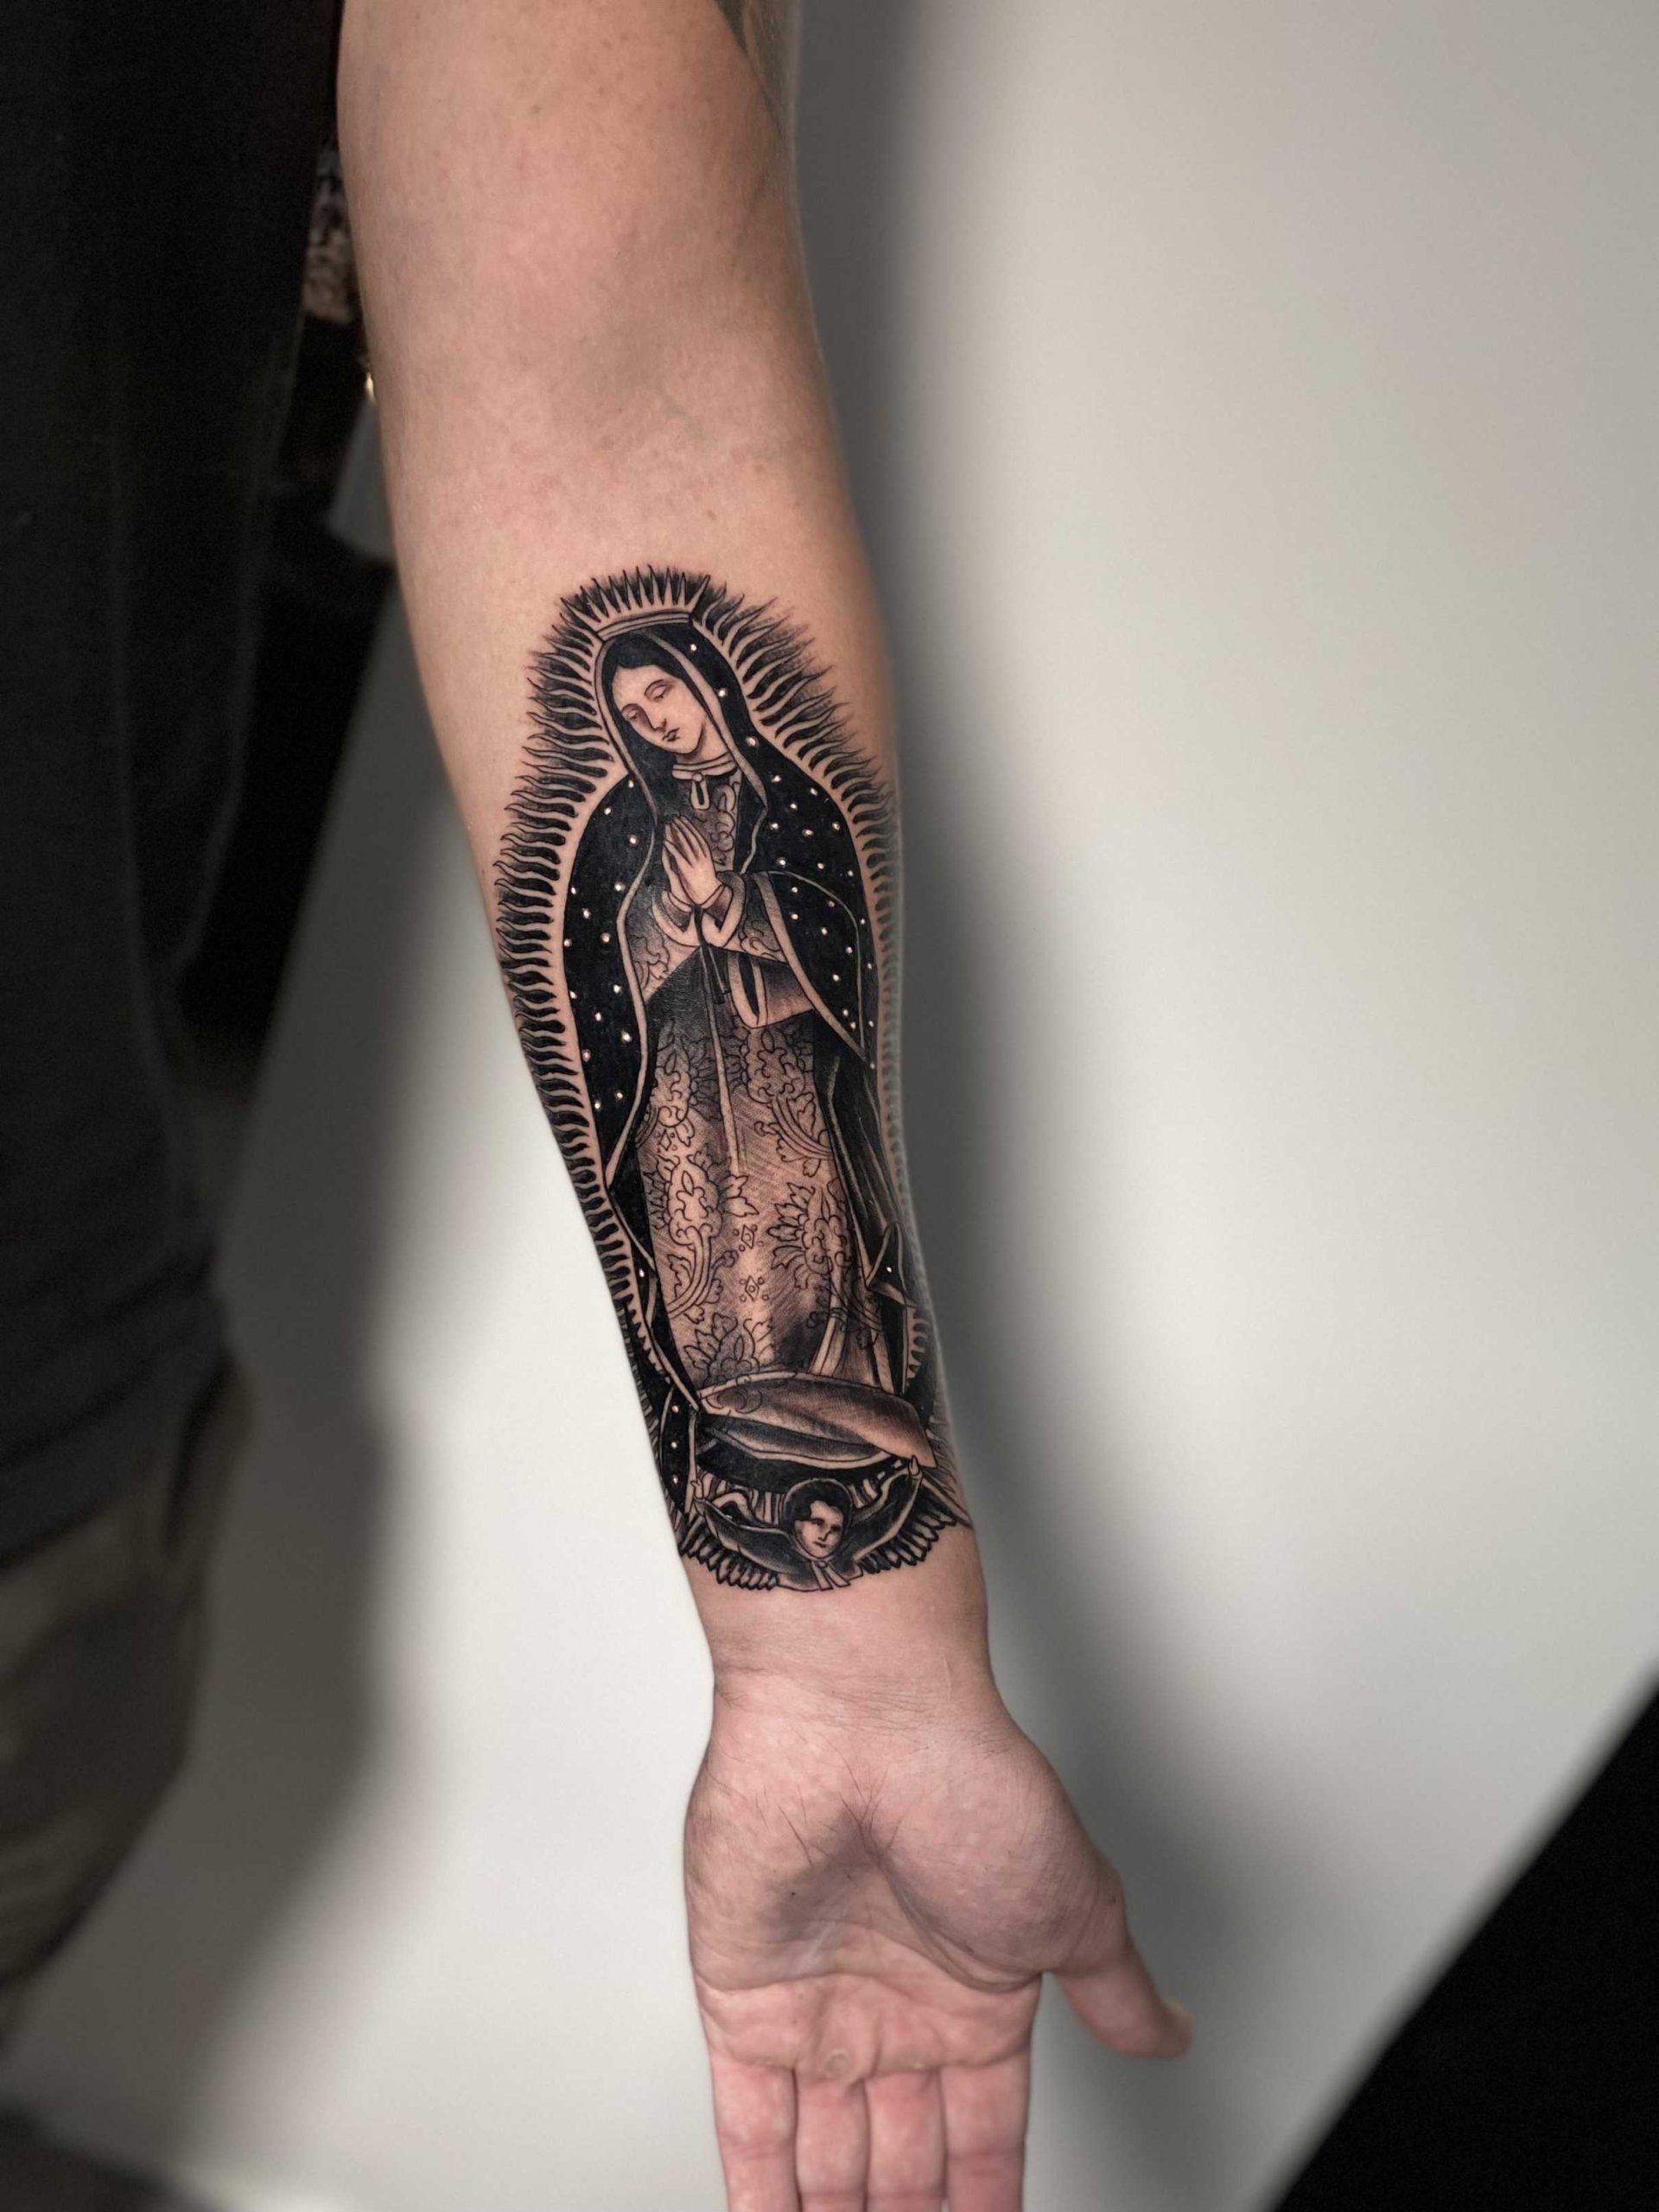 Virgen de Guadalupe by Rocky @Blackserpents in Los Angeles : r/tattoos